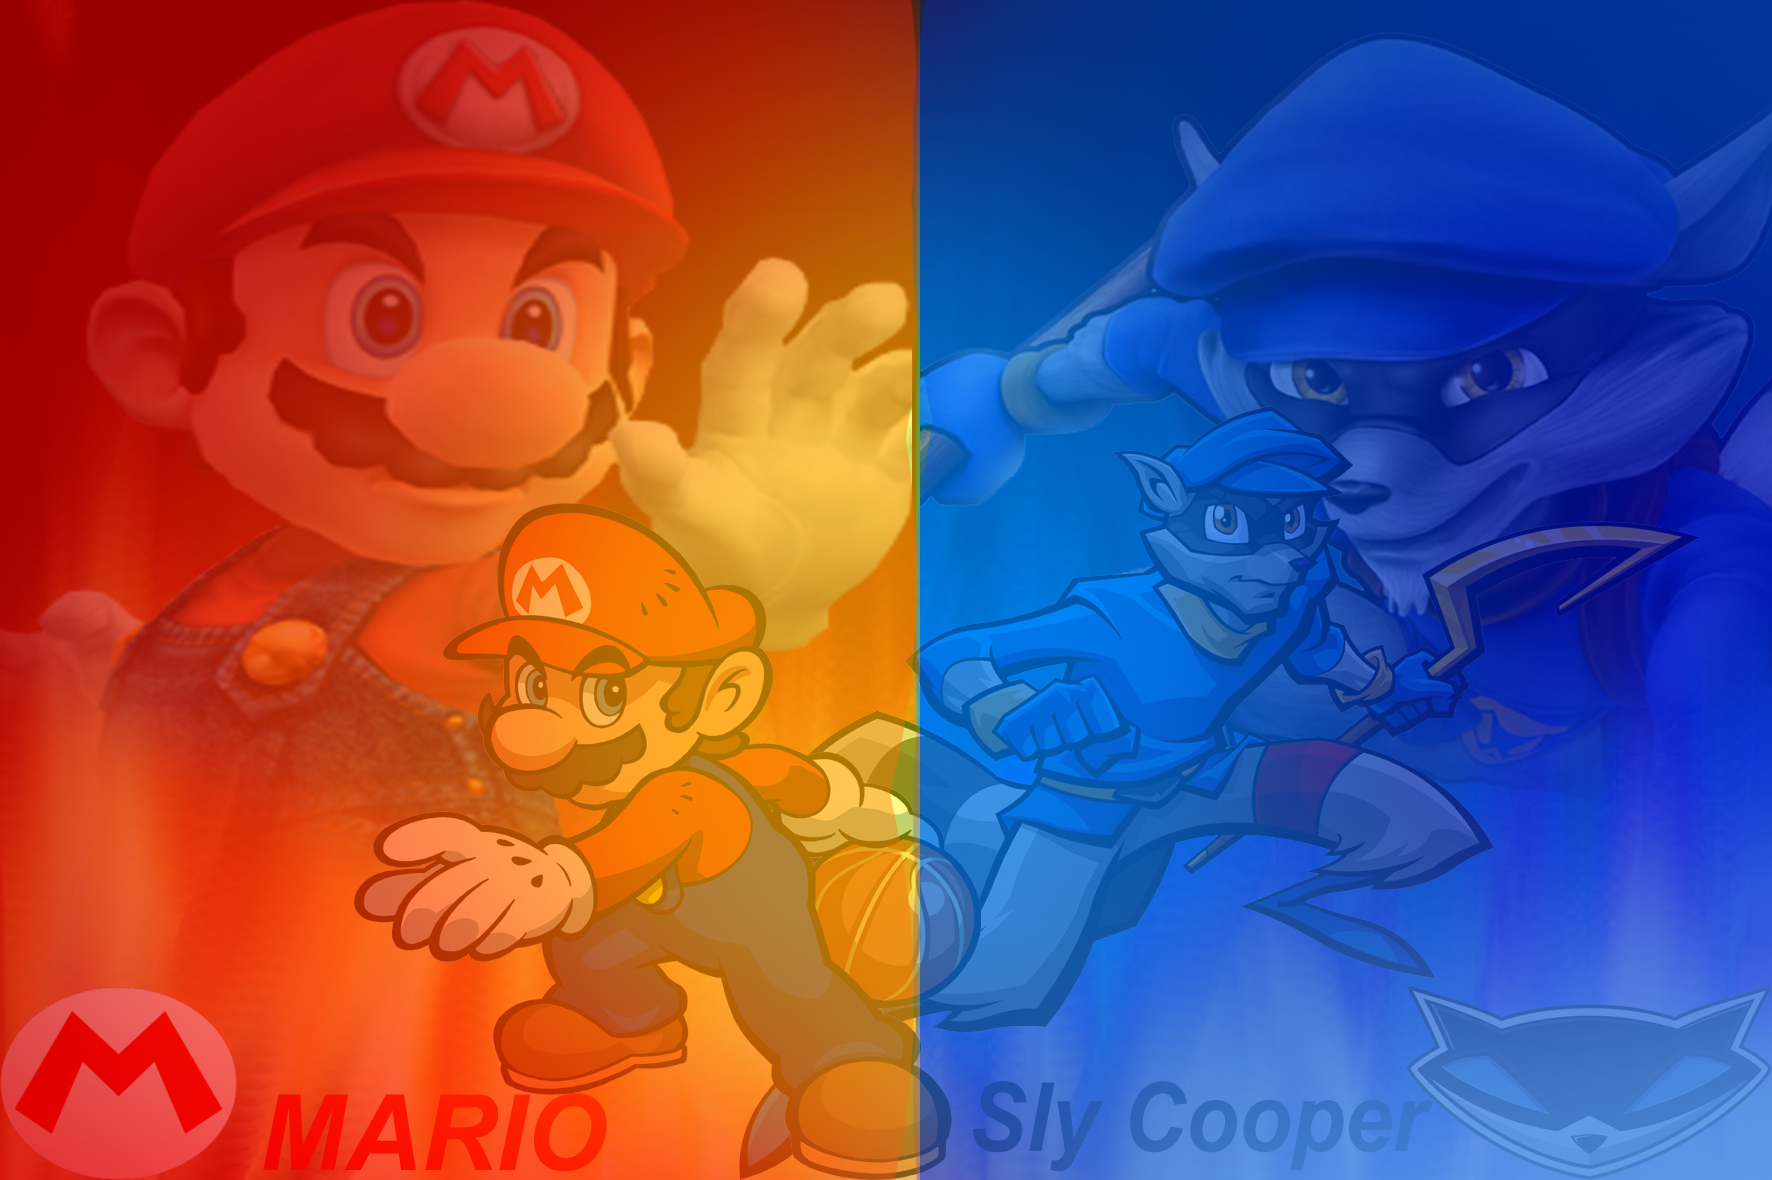 Mario vs. Sly Cooper  I Got Bugs in My Head